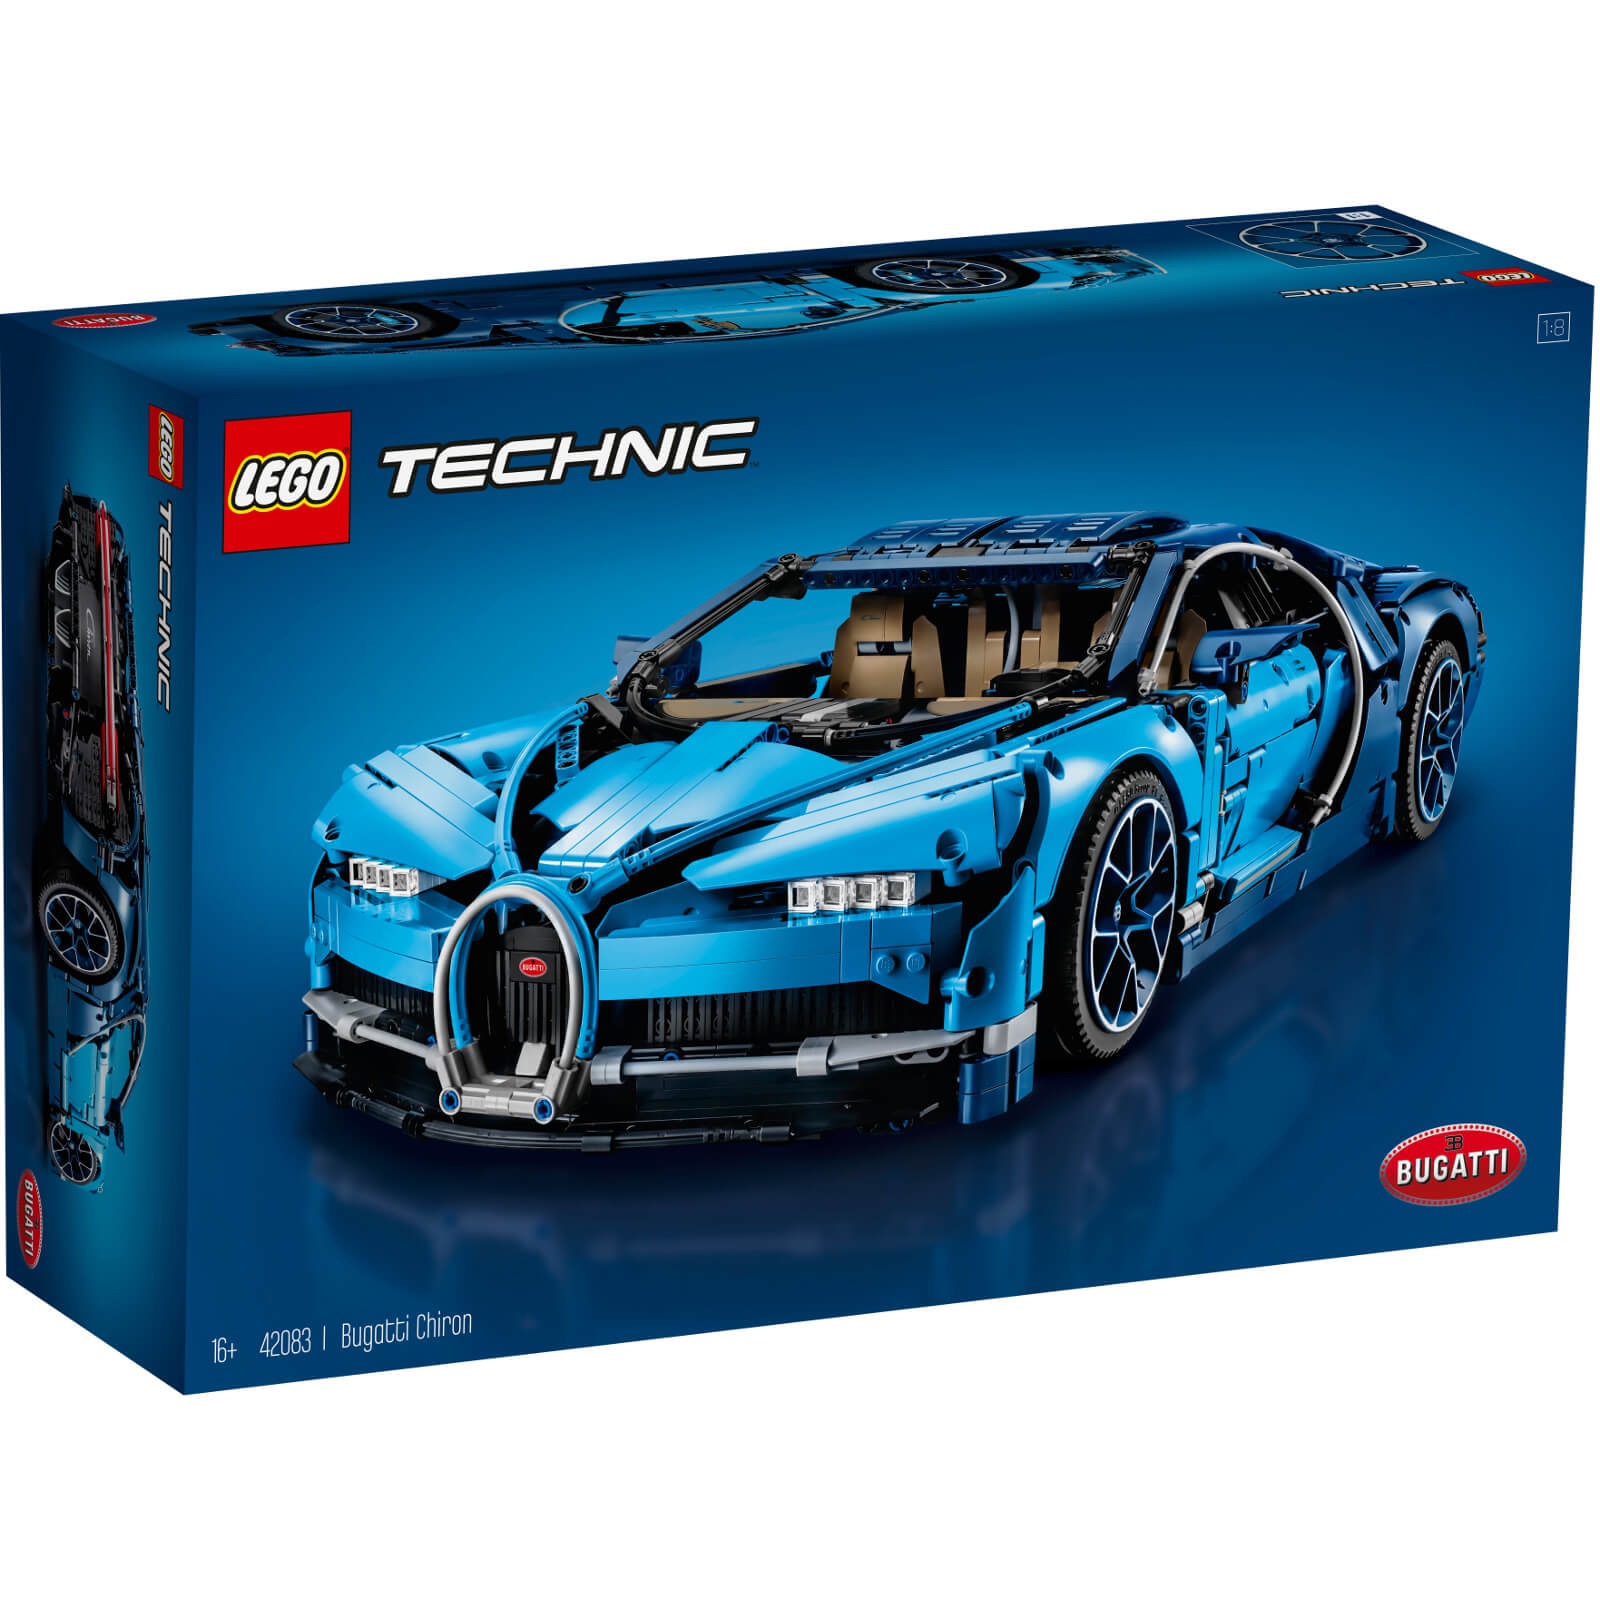 LEGO Technic: Bugatti Chiron Supercar (42083) Toys | Zavvi US布加迪乐高